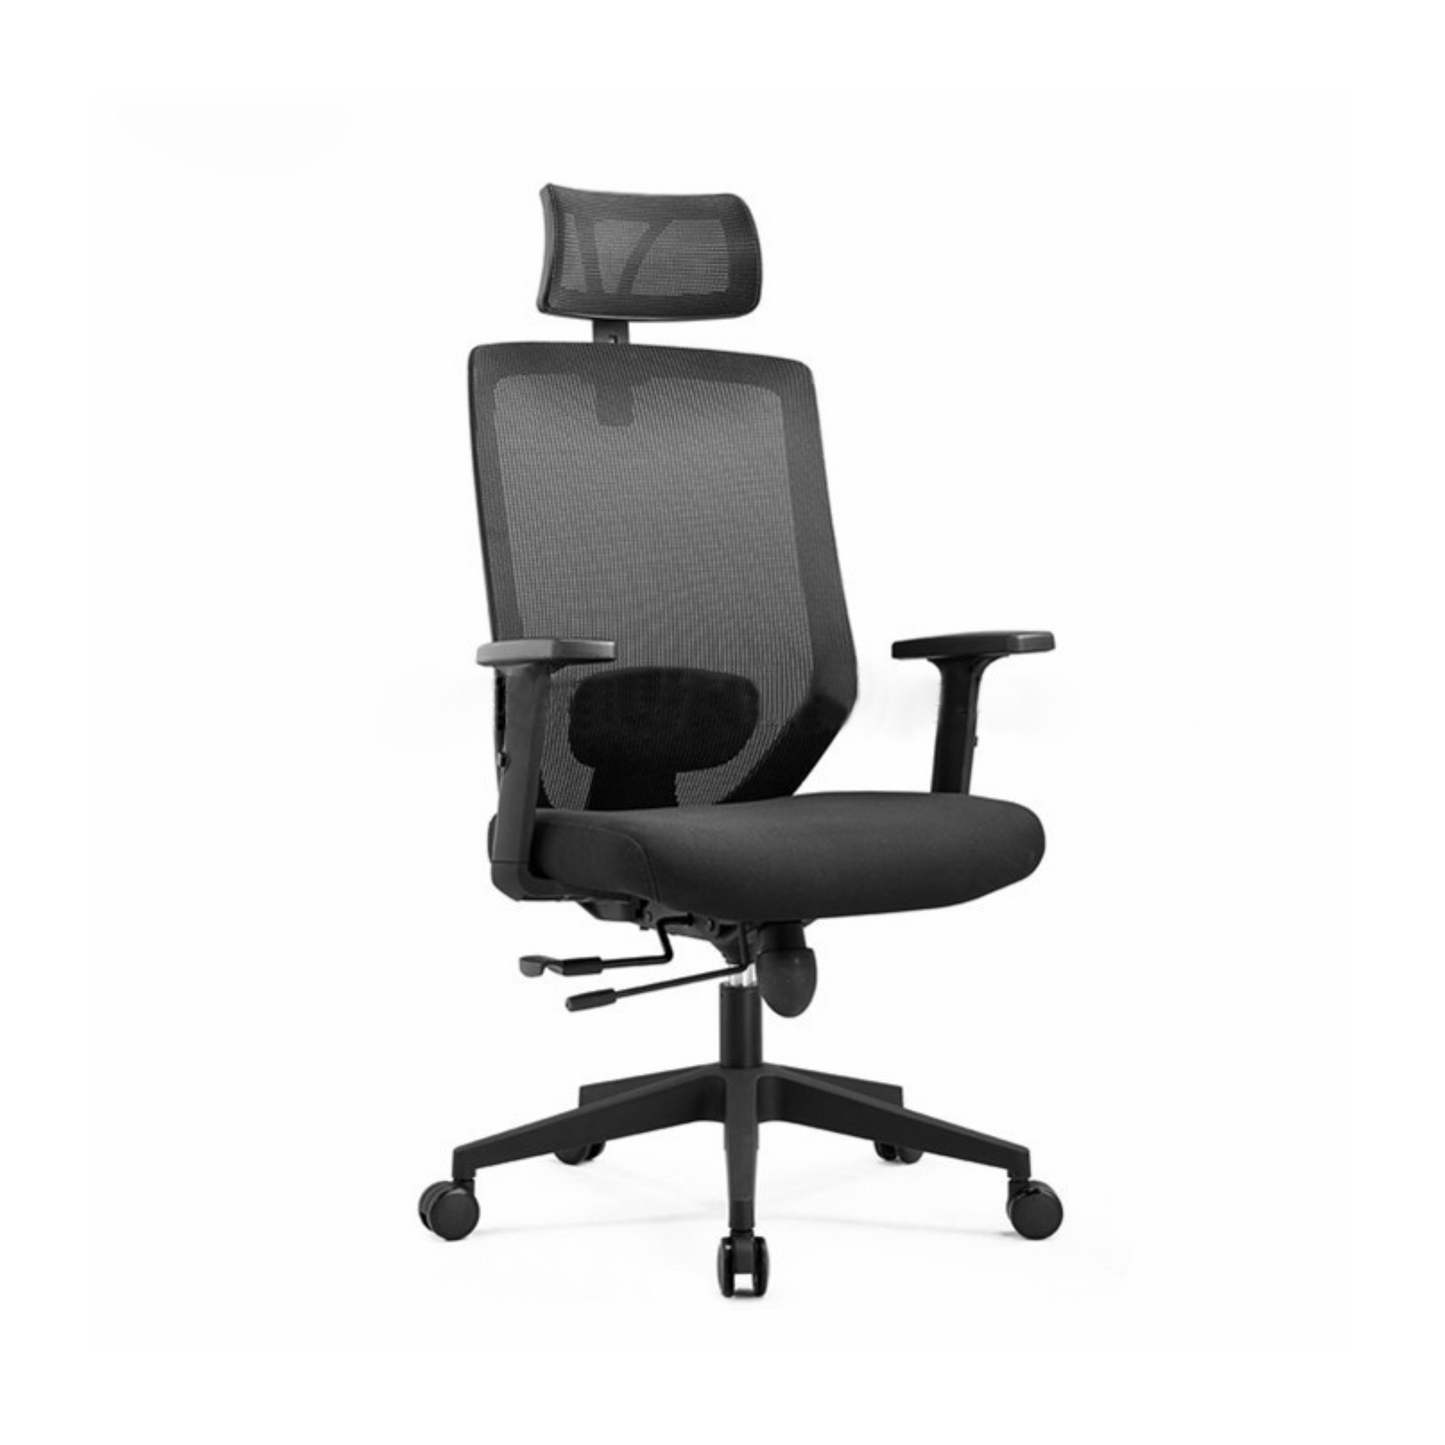 H6051-1 High back ergonomic chair